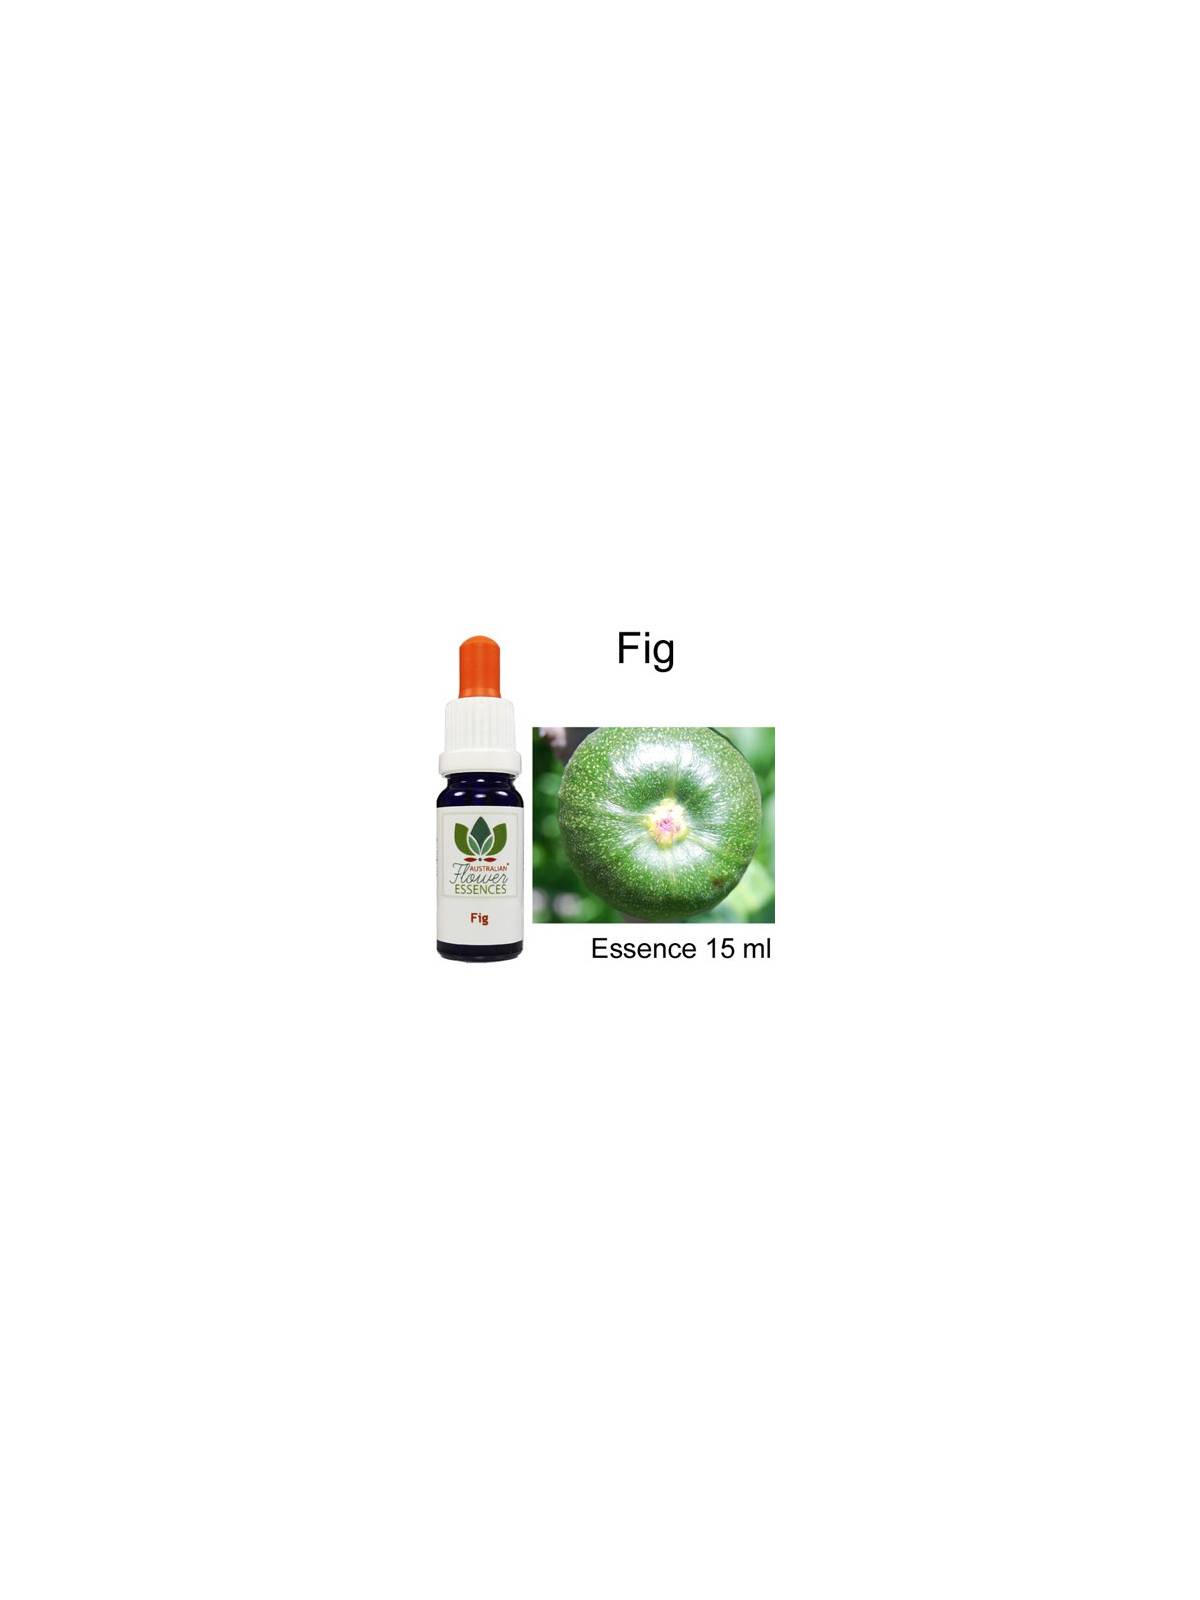 FIG Australian Flower Essences 15 ml